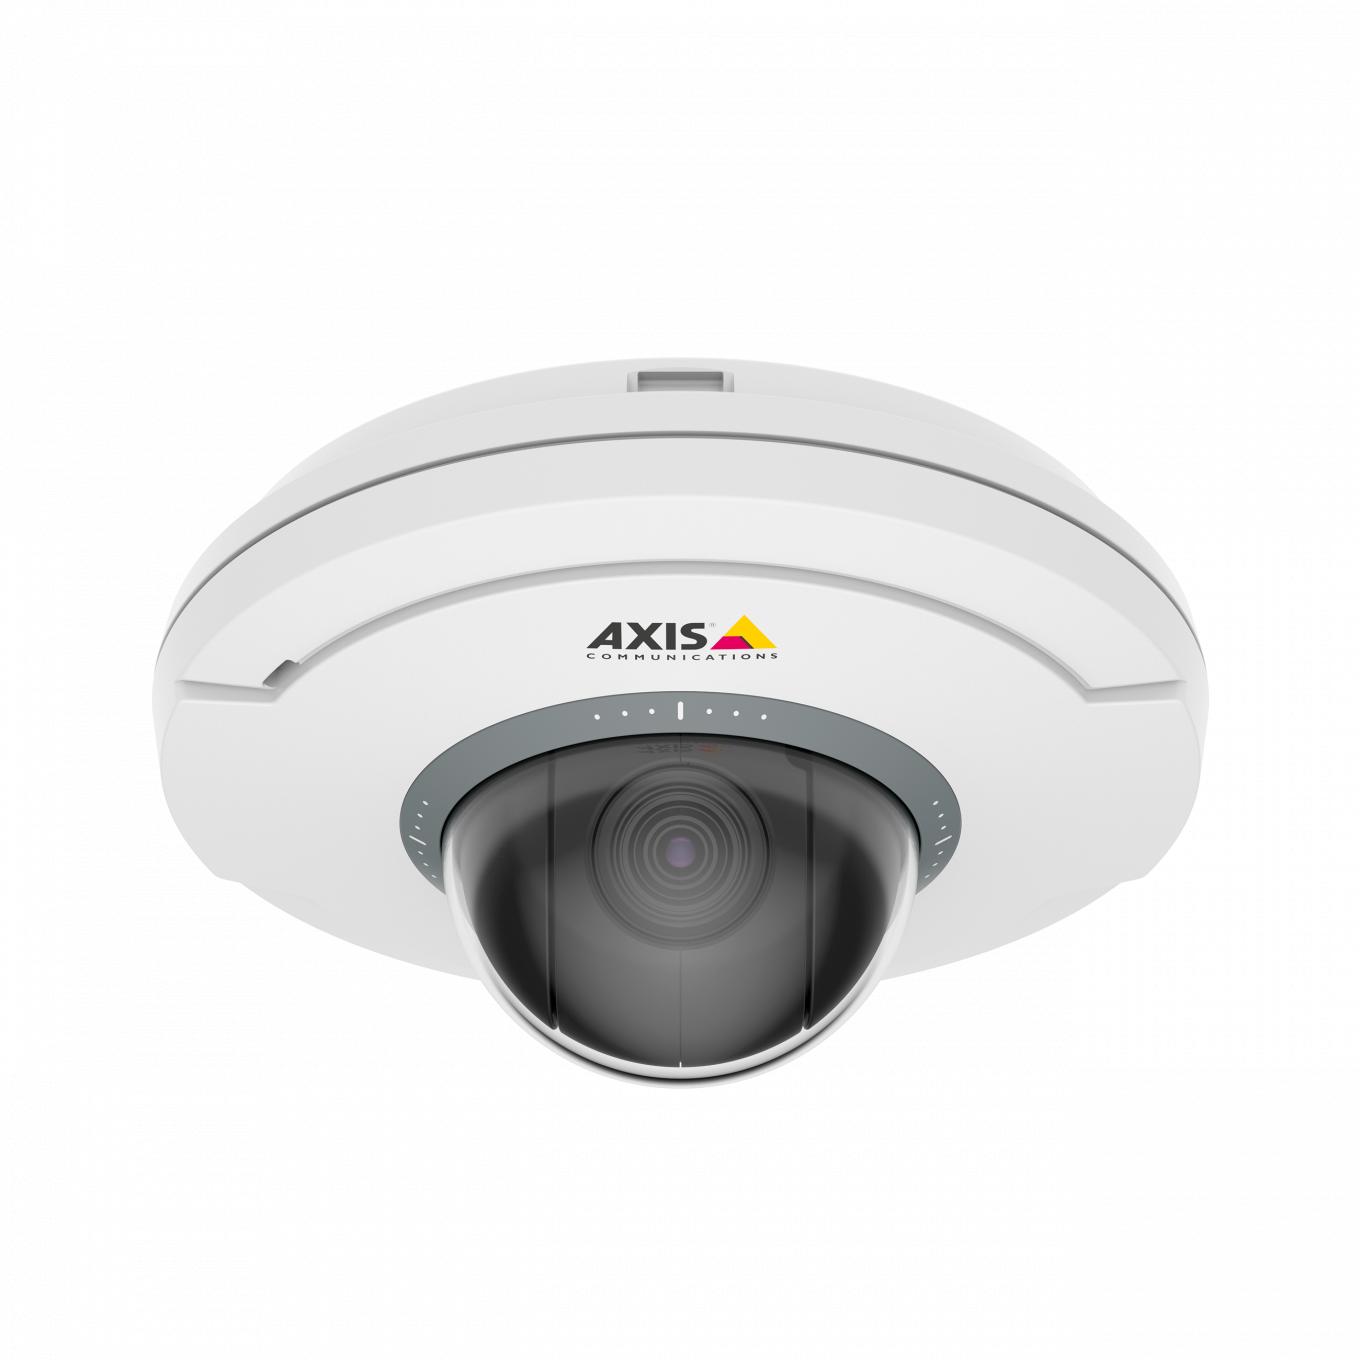 Камера AXIS M5075 черно-белая с логотипом Axis, вид спереди